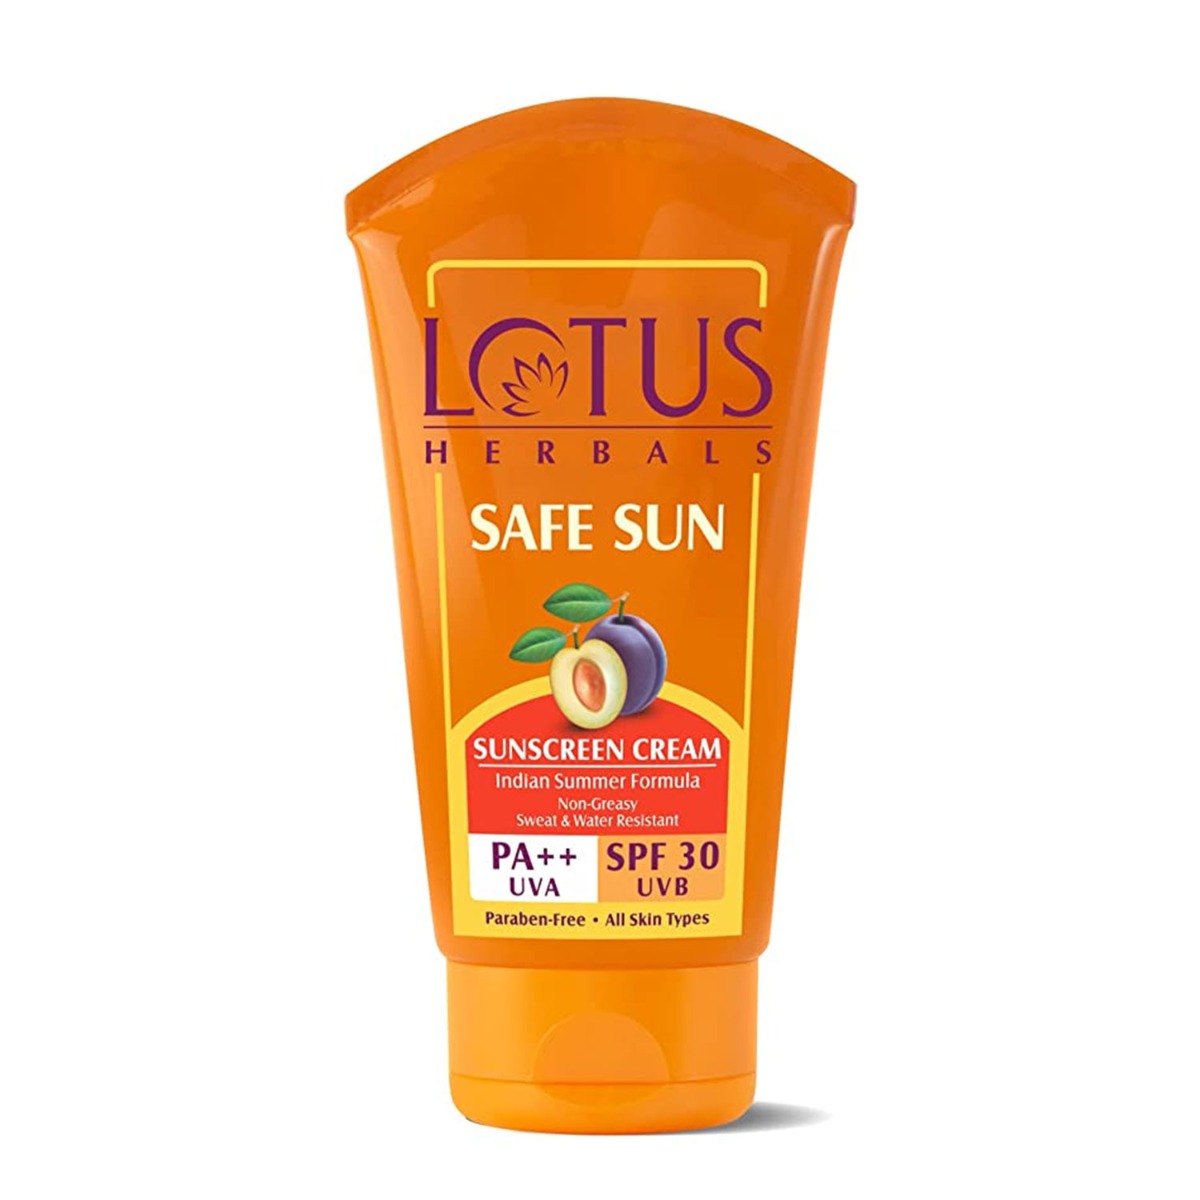 Lotus Herbals Sunscreen Cream SPF 30, 50gm